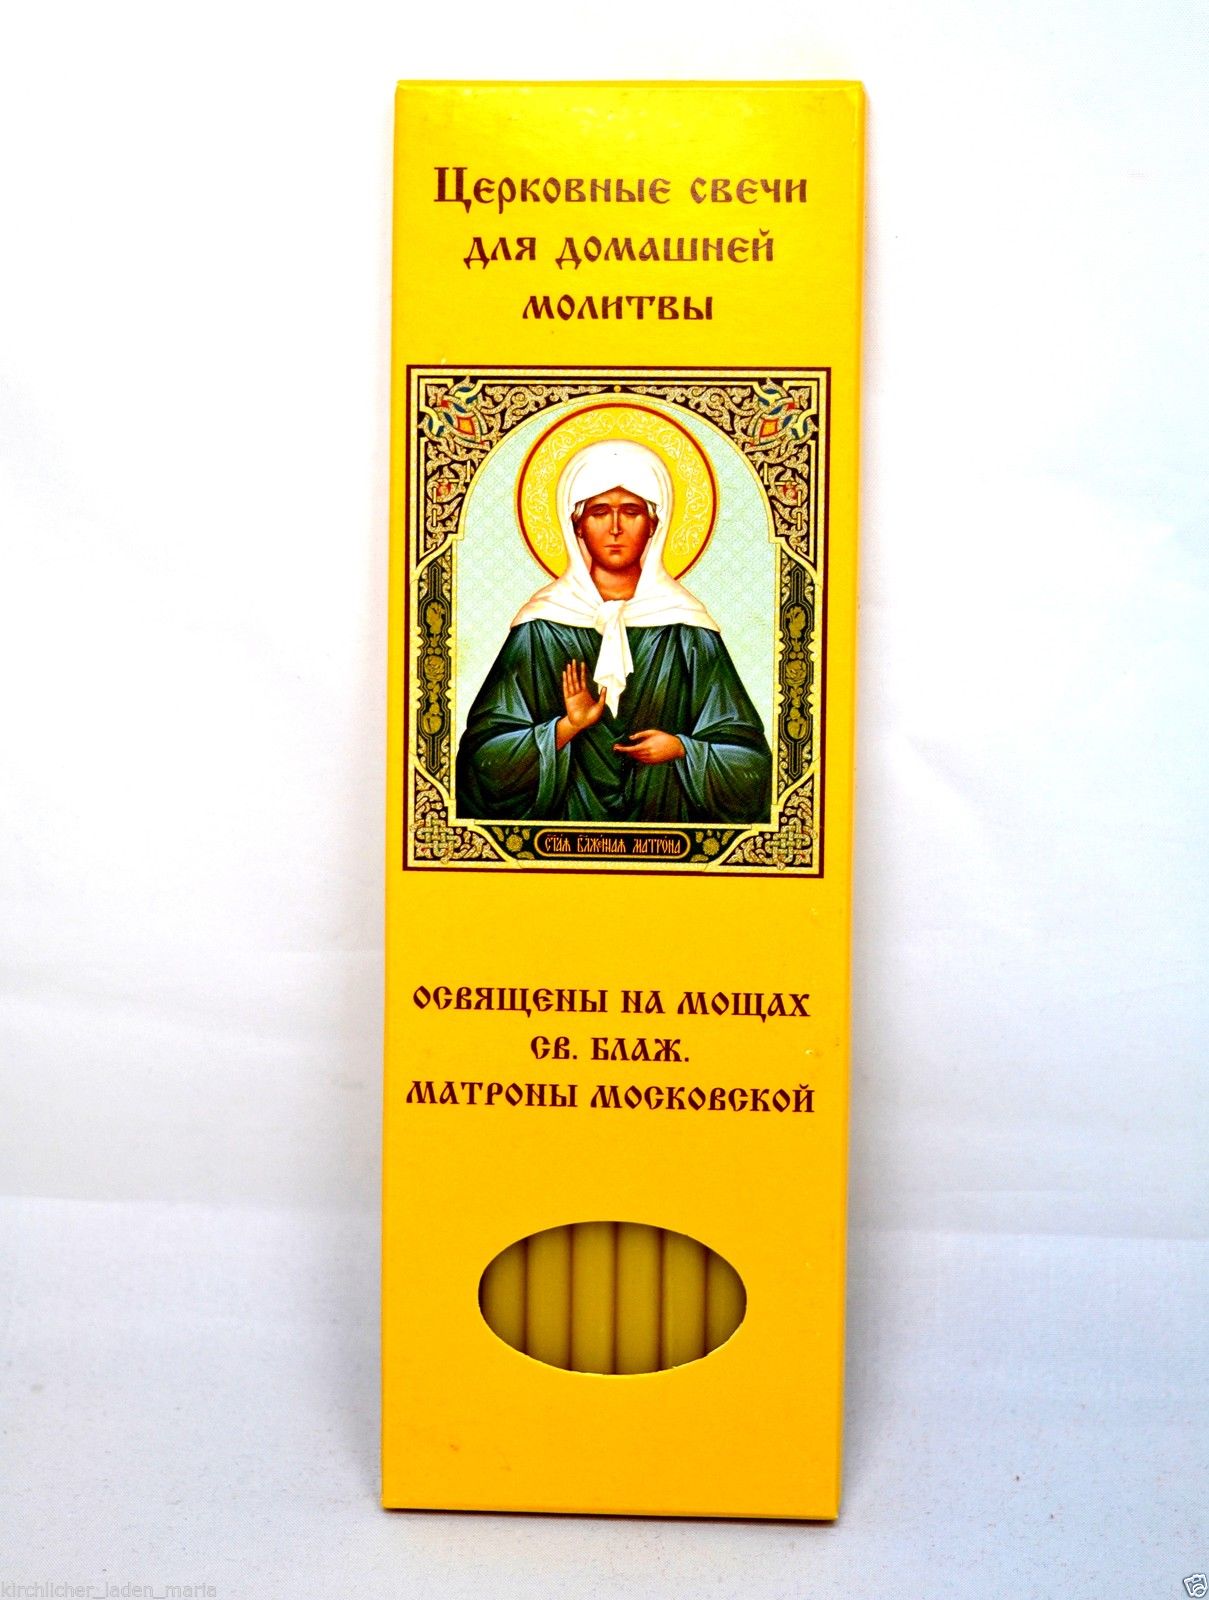 Kerzen, Matrona Moskau, Kirchenqualität, 10 st.